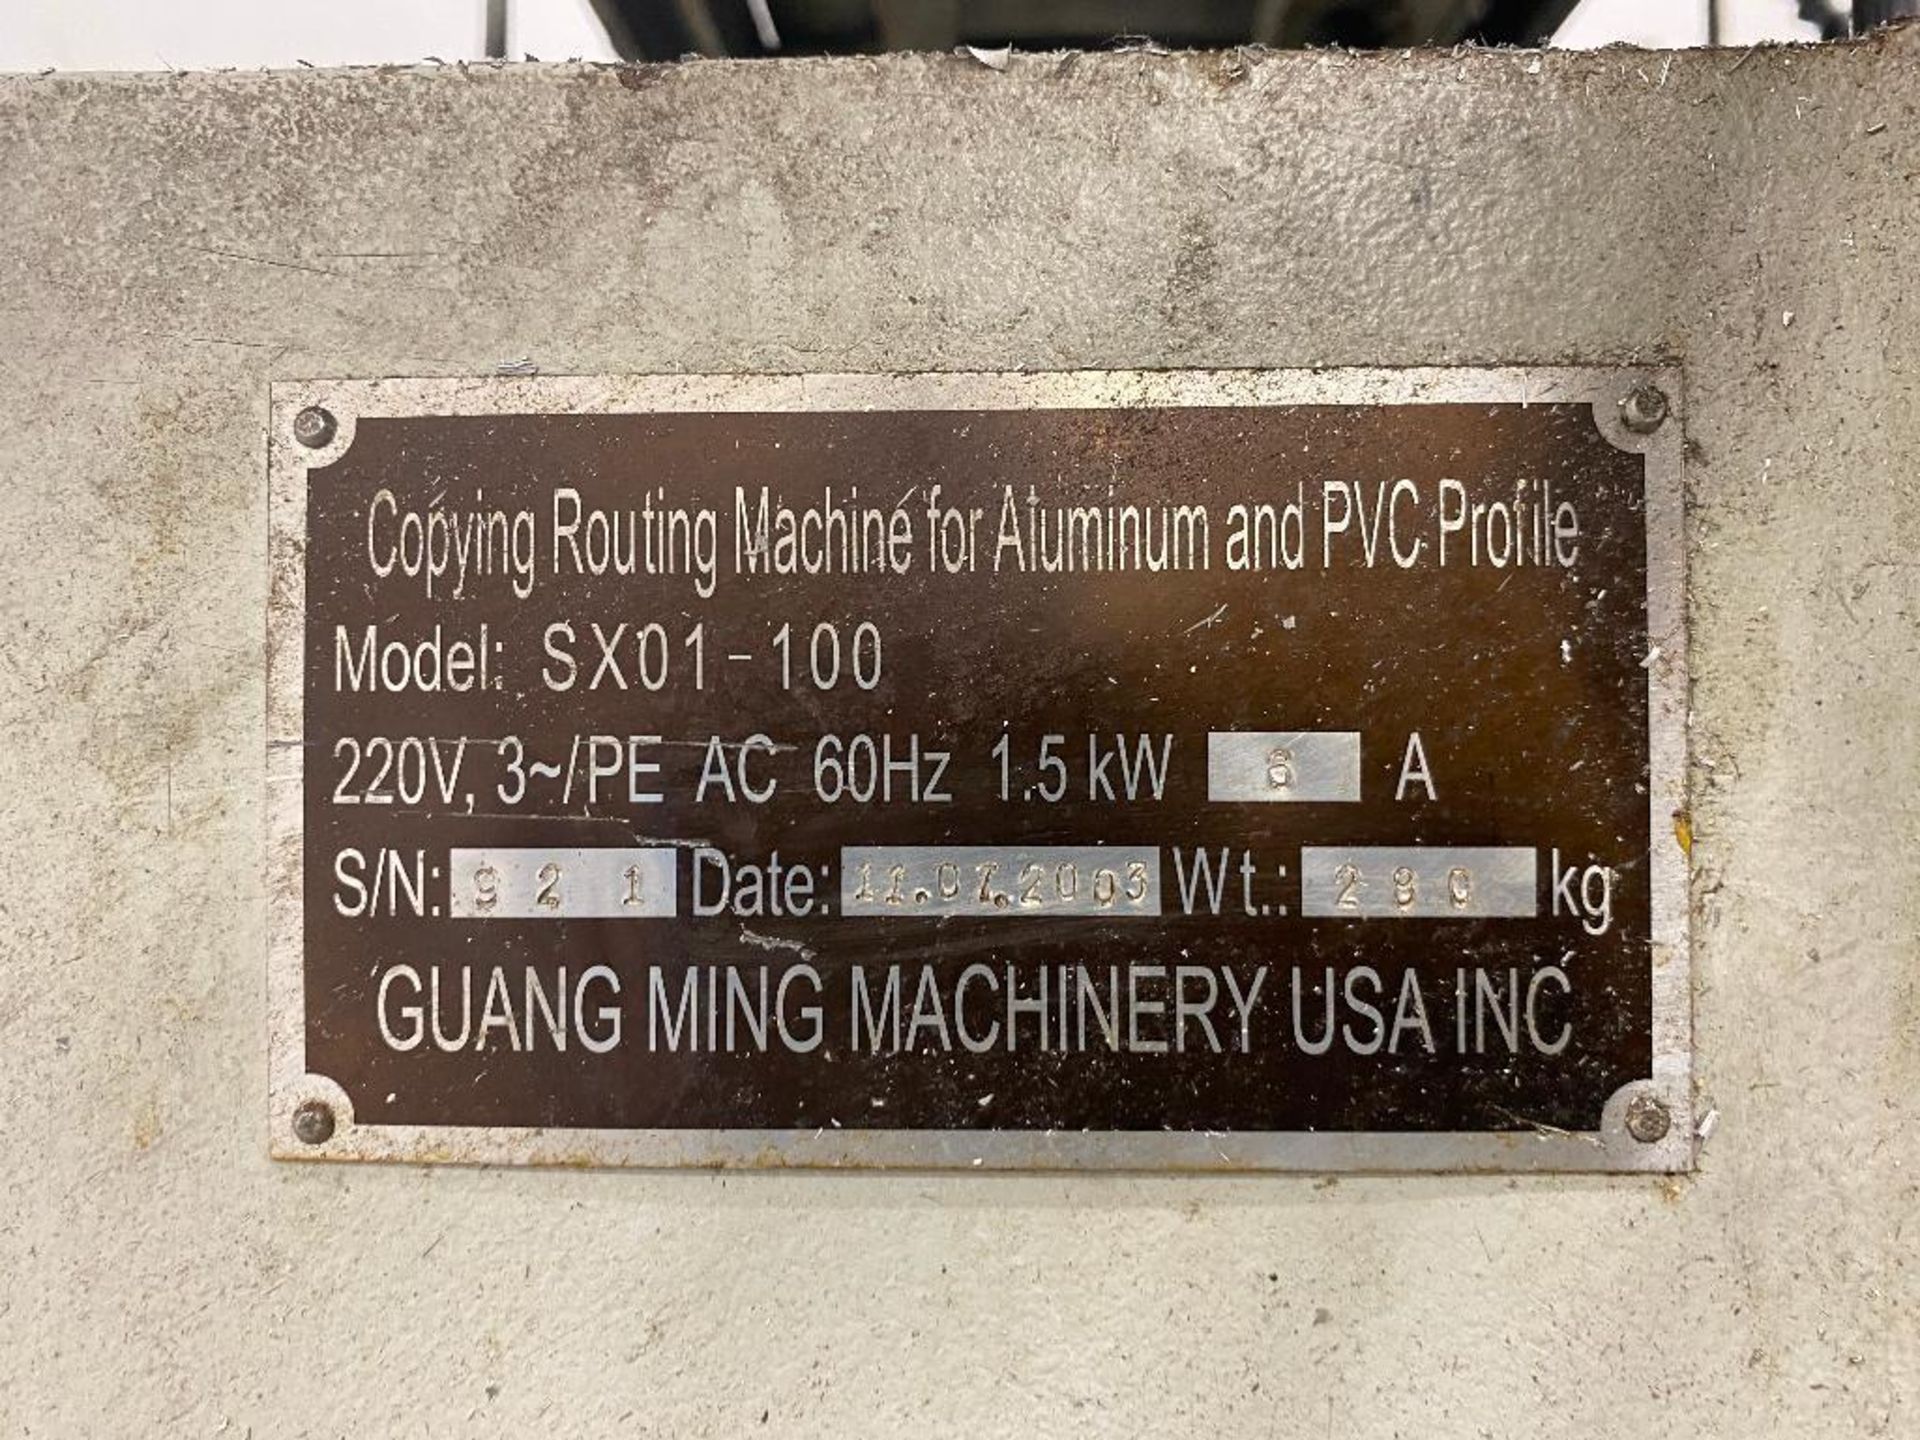 Guang Ming SX01-100 Copying Routing Machine. - Image 7 of 7